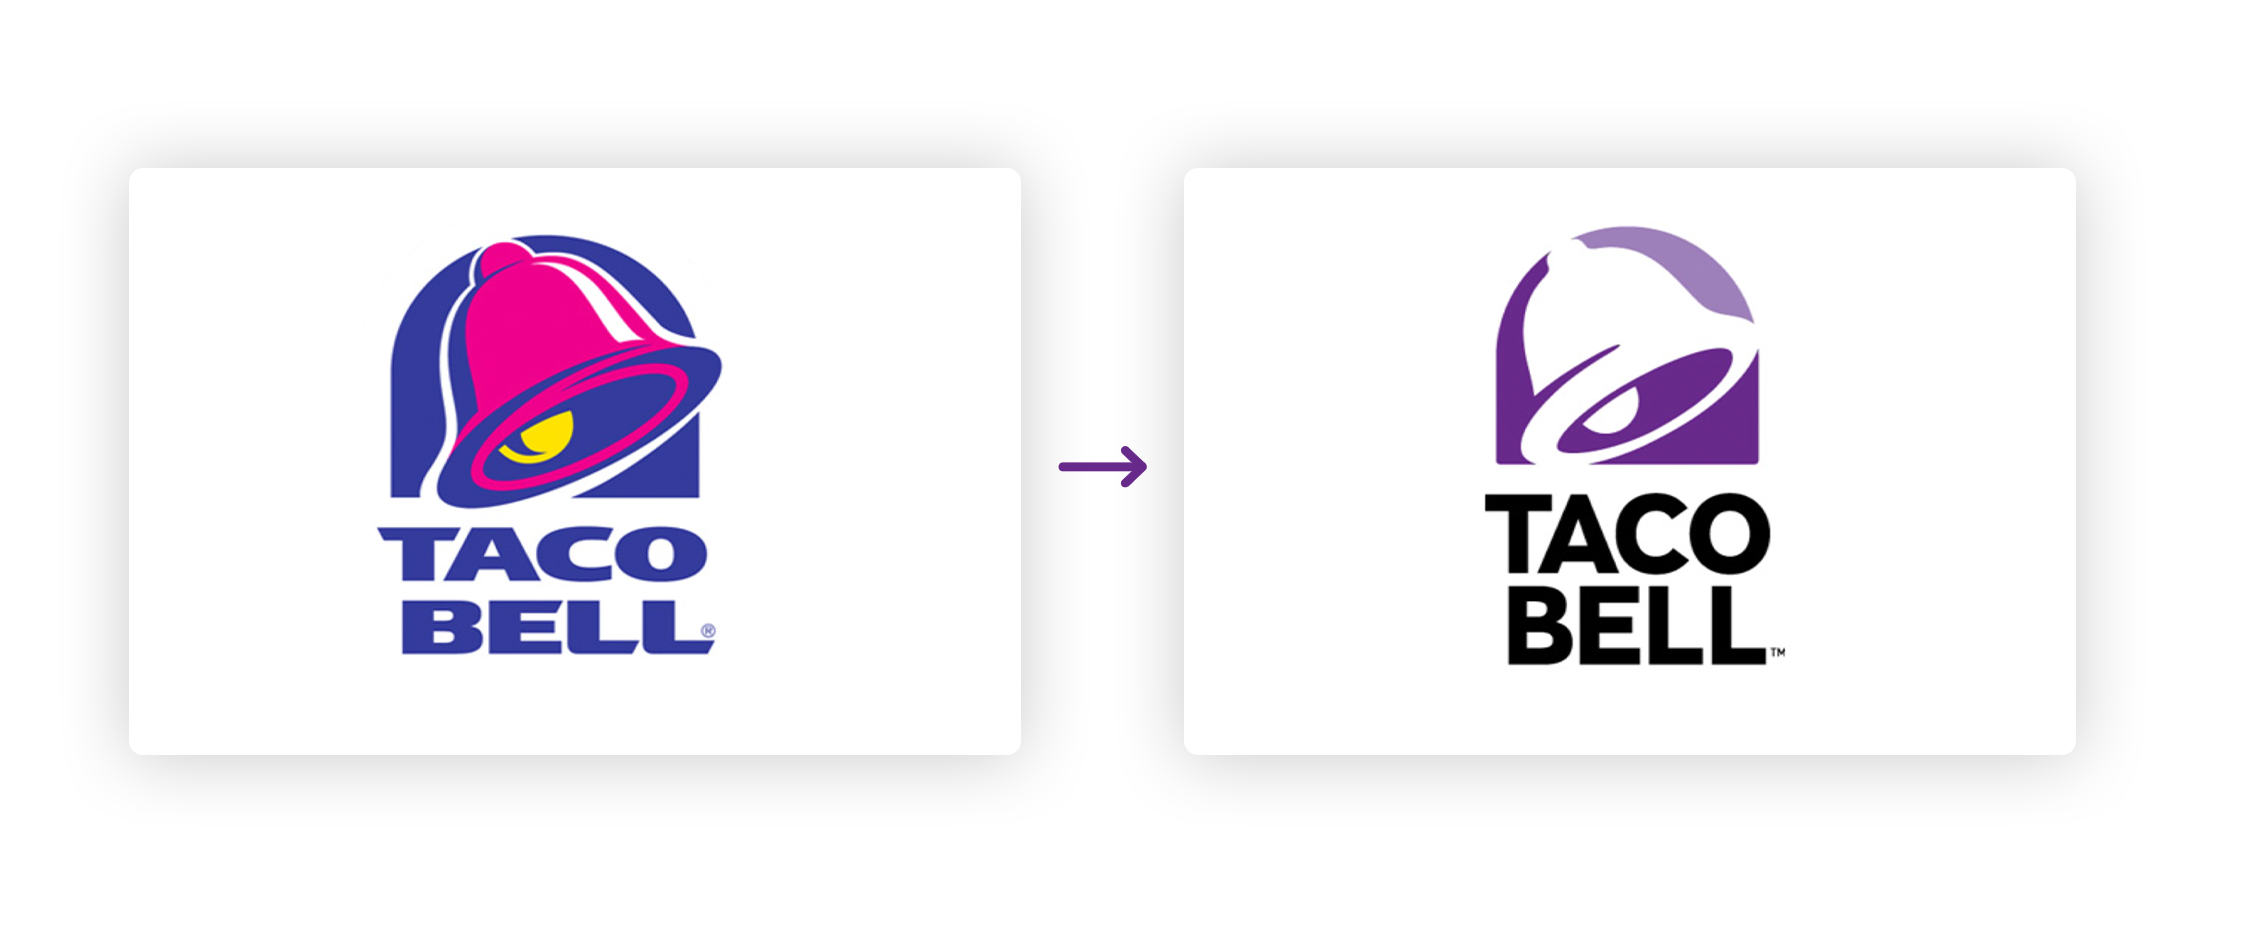 Taco Bell rebrand